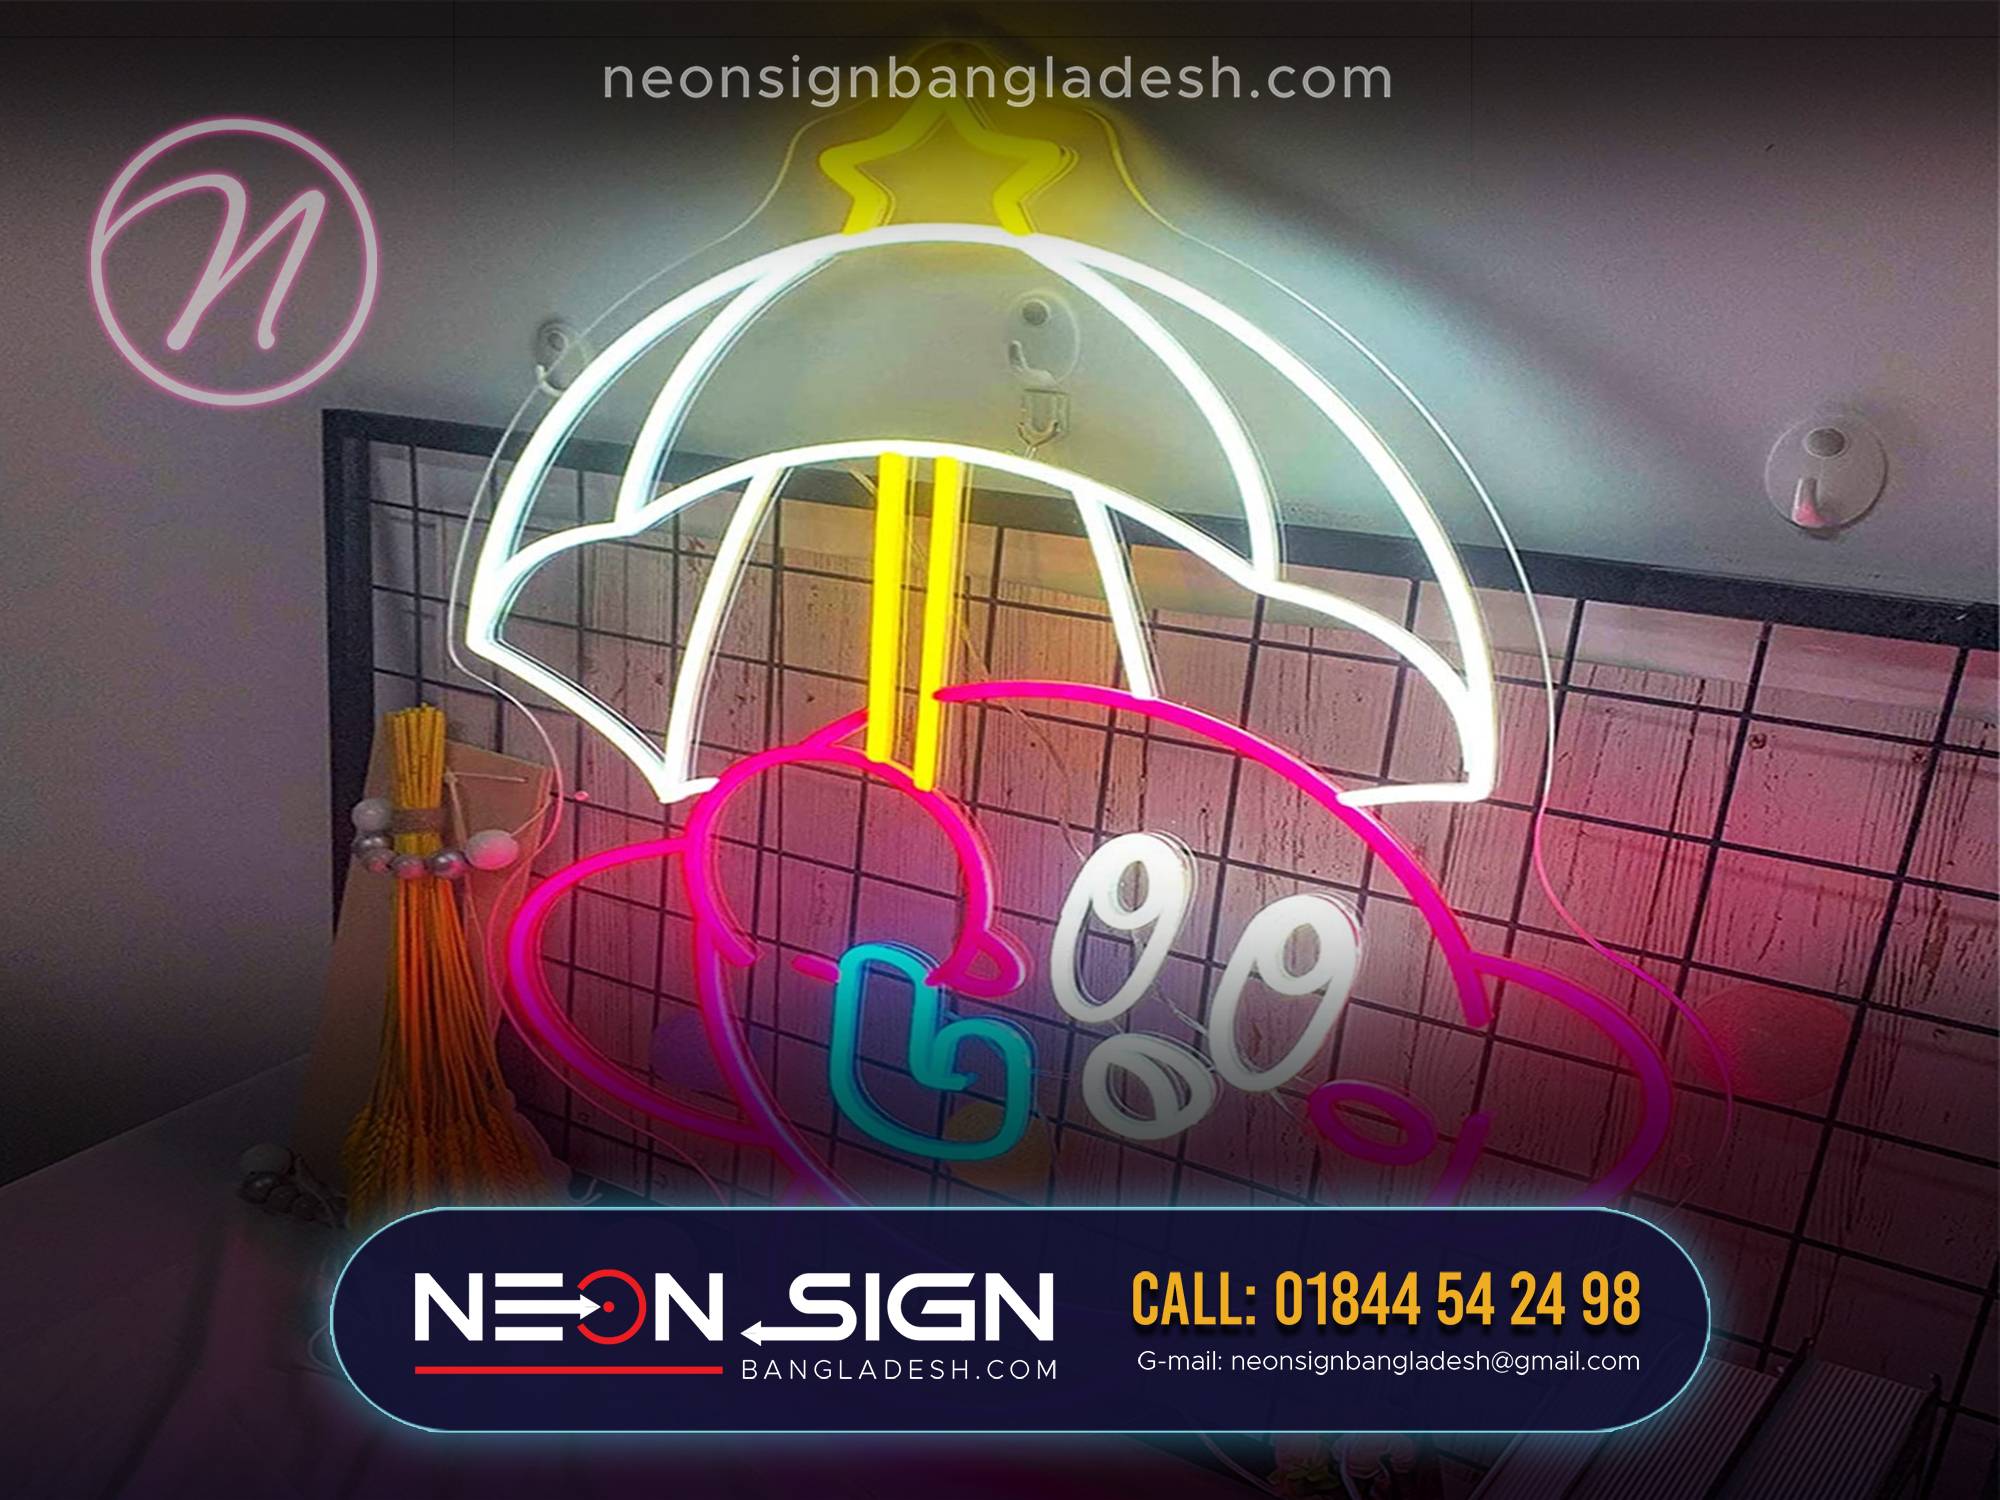 #neonsigns #customneonsign #customneonsign #neonflexcustom #neon #LED #neonlight #BDnews #bd #BDgift #AdvertisingExcellence #neonart #neon #neonlights #neonsign #neonvibes #neonglow #neonbangladesh #neoname #neonvibe #neongift #Bangladeshneonparty #neonparty #partyneon #neoncolors #customneon #customneonsign #neonlove #madeinbangladesh🇧🇩 #partytheme #housedesign #roomdecor #roommakeover #neonsigns